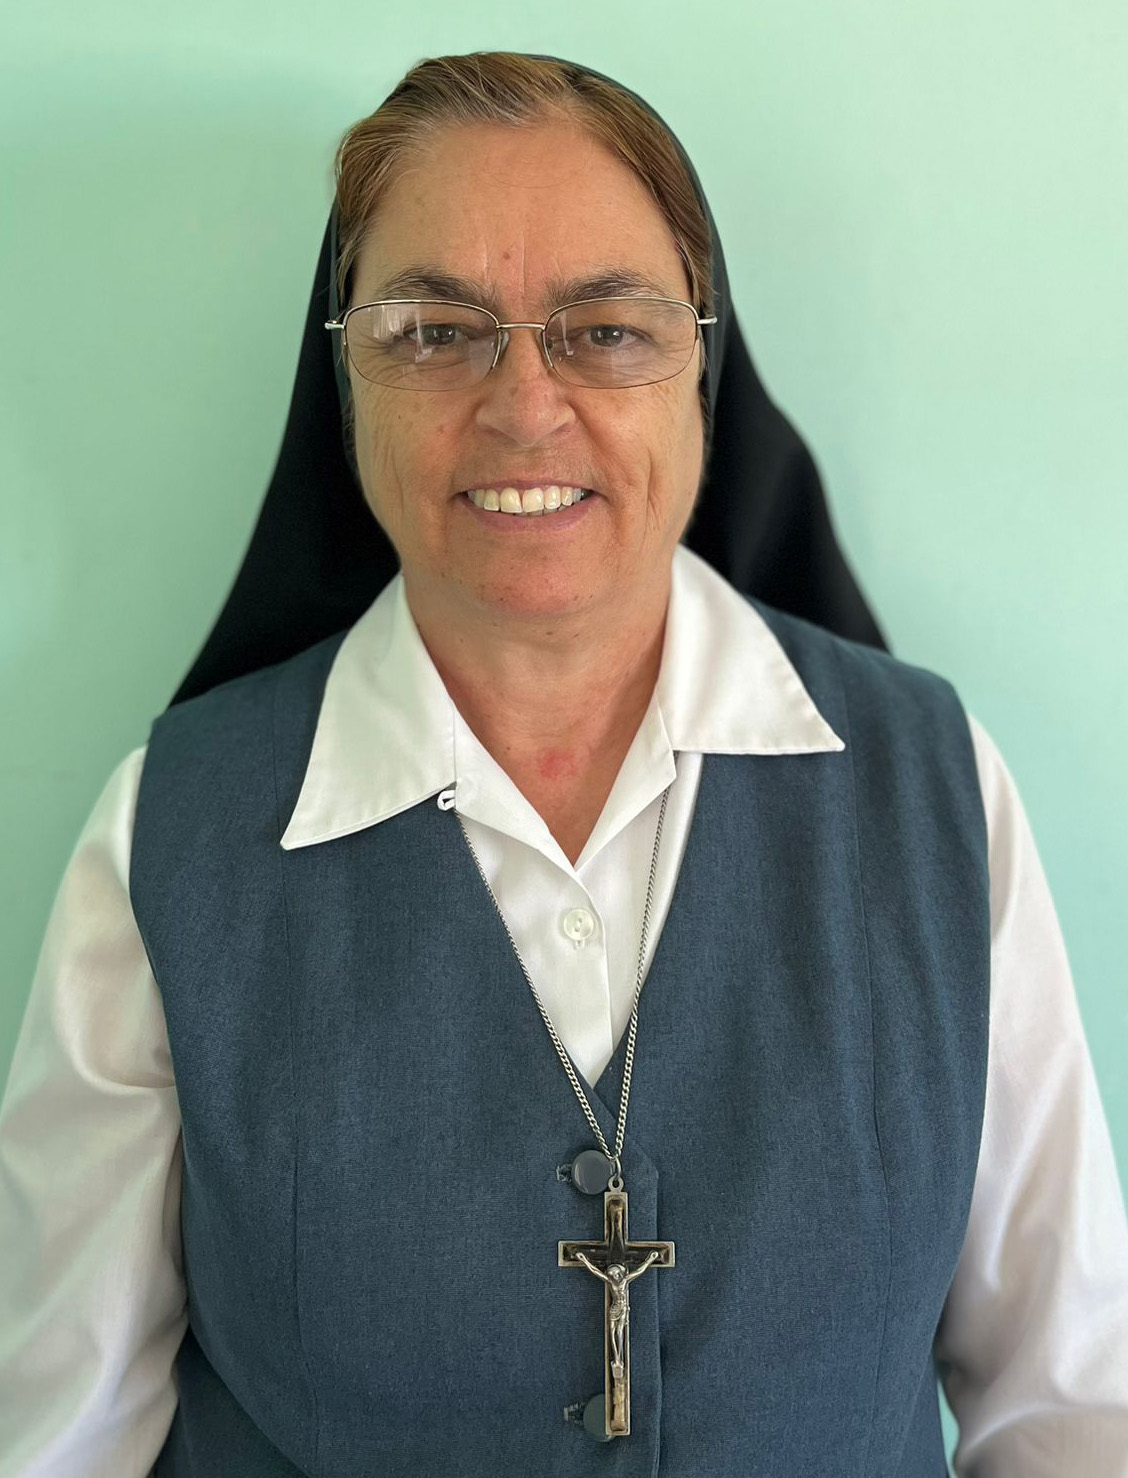 Sister Maria Teresa “Tere” de Loera Lopez